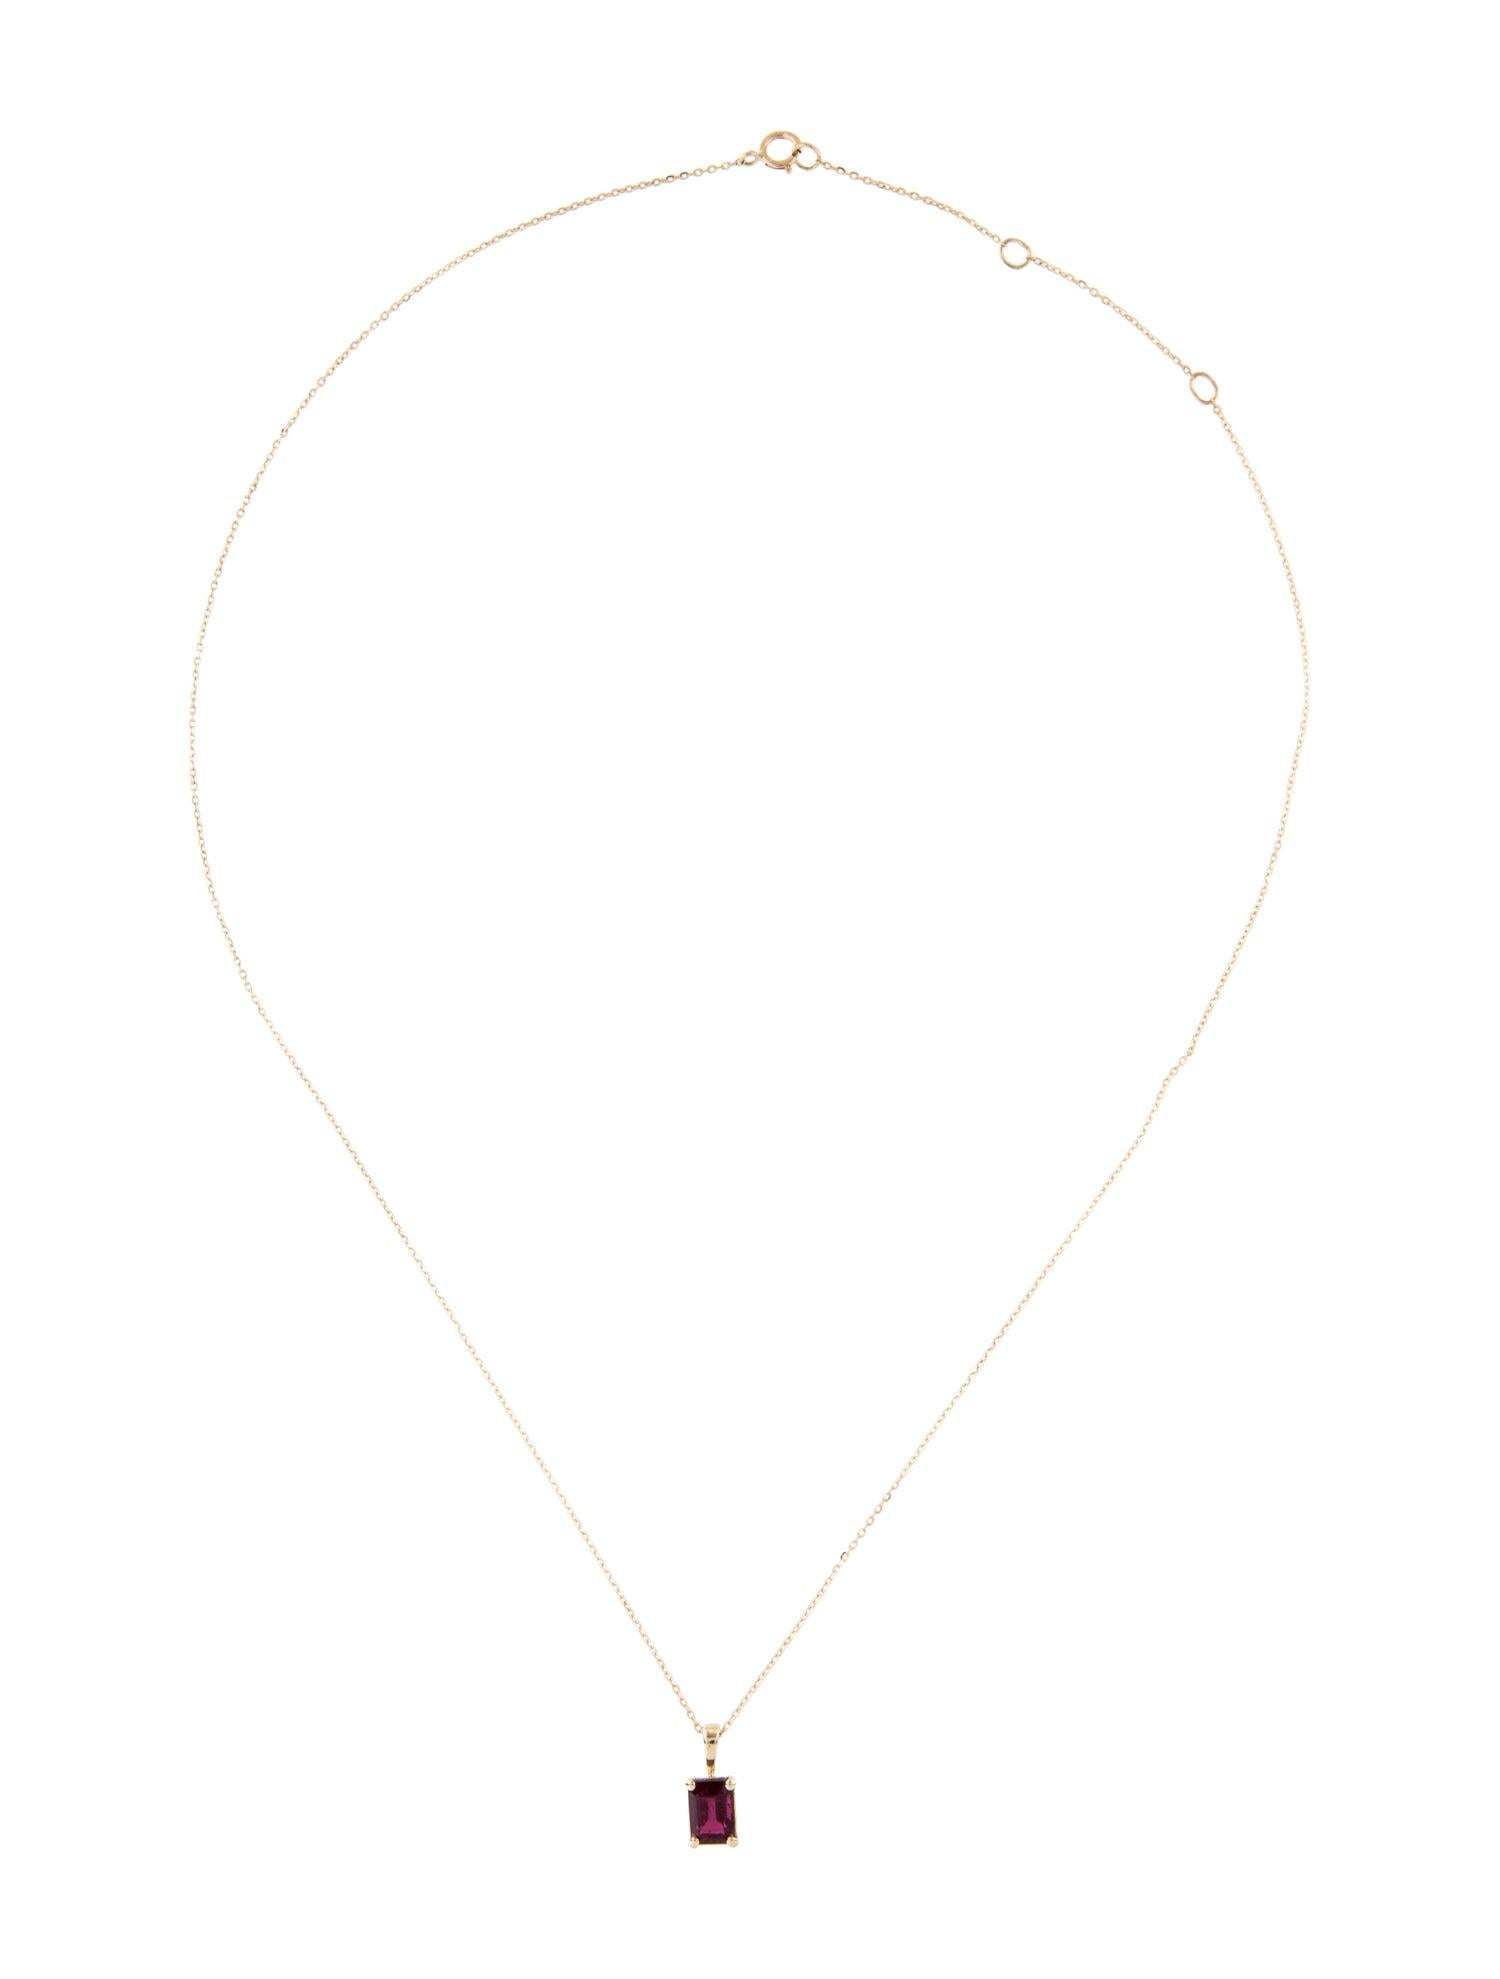 Baguette Cut 14K Yellow Gold Rhodolite Pendant Necklace - Cornered Rectangular Step Cut For Sale